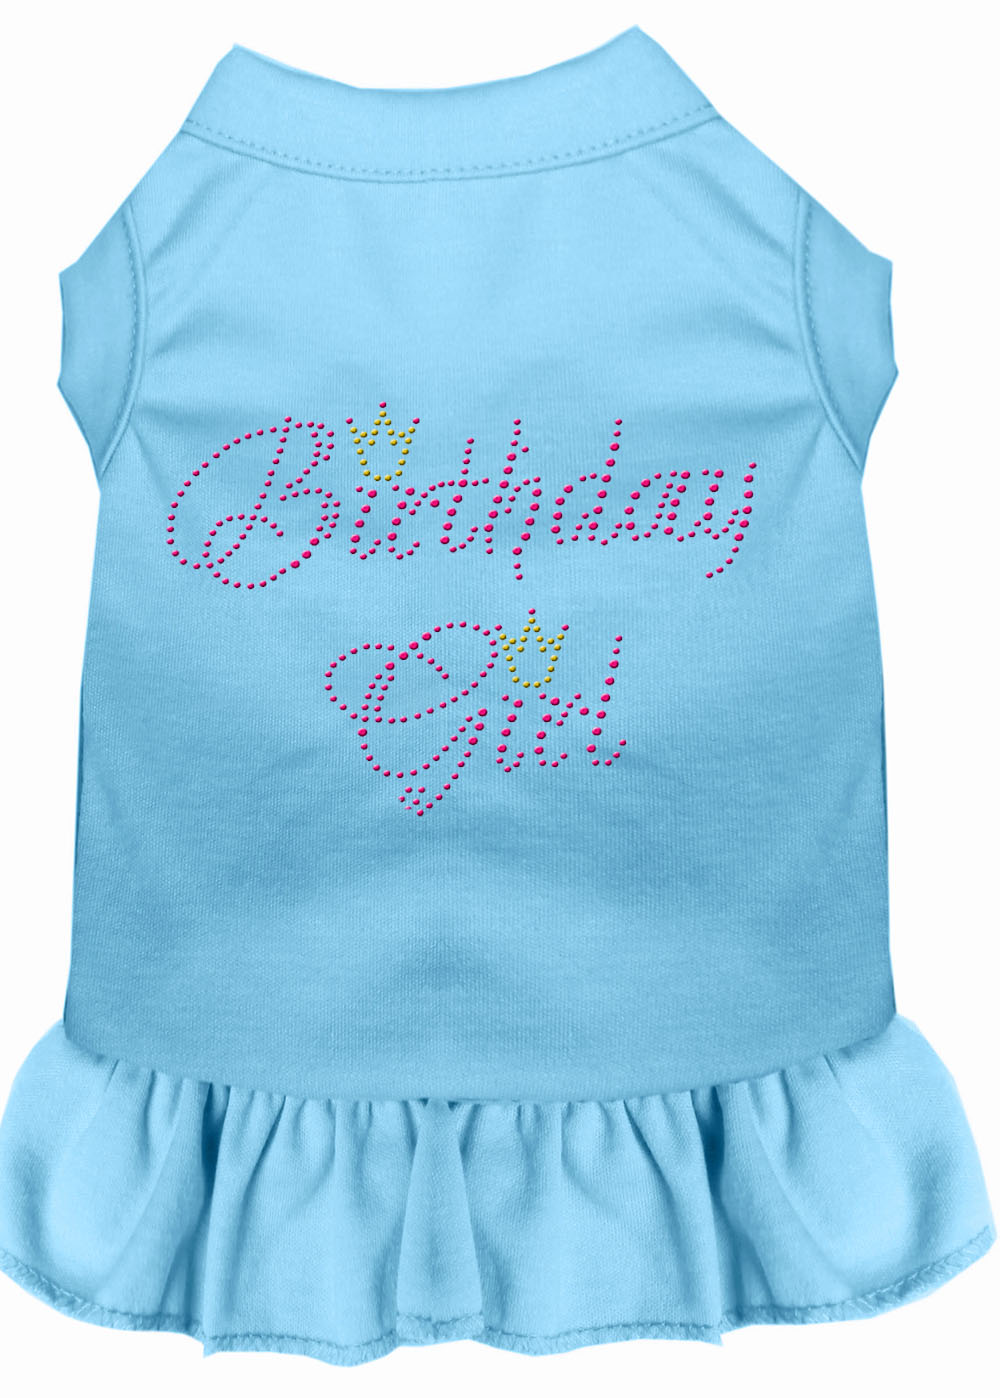 Birthday Girl Rhinestone Dress Baby Blue XL